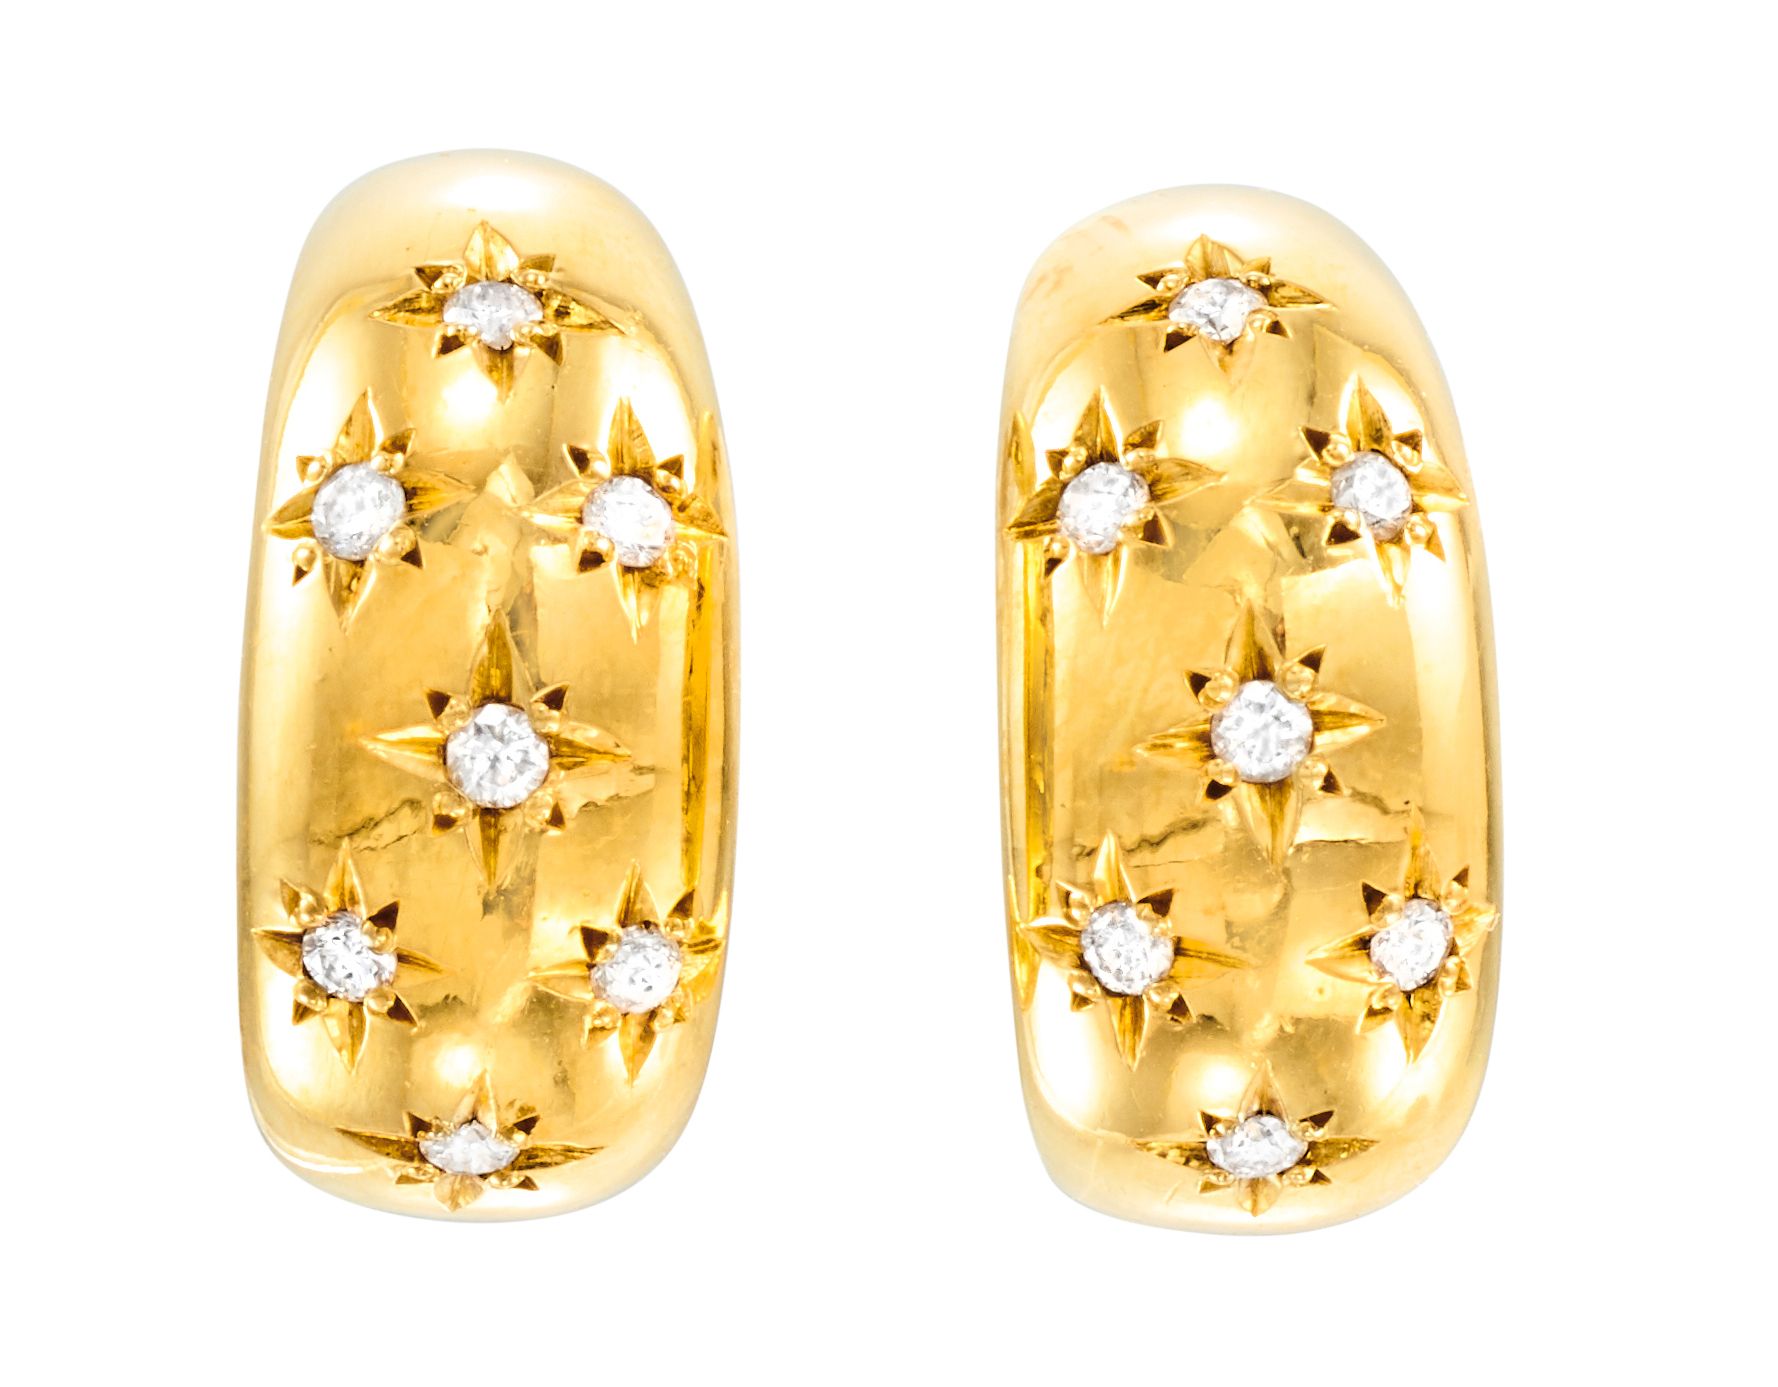 Paire de boucles d'oreilles 黄金镶嵌星形明亮式切割钻石
高：1.8 厘米 - 宽：0.60 至 0.90 厘米 
重量：9.37 克&hellip;